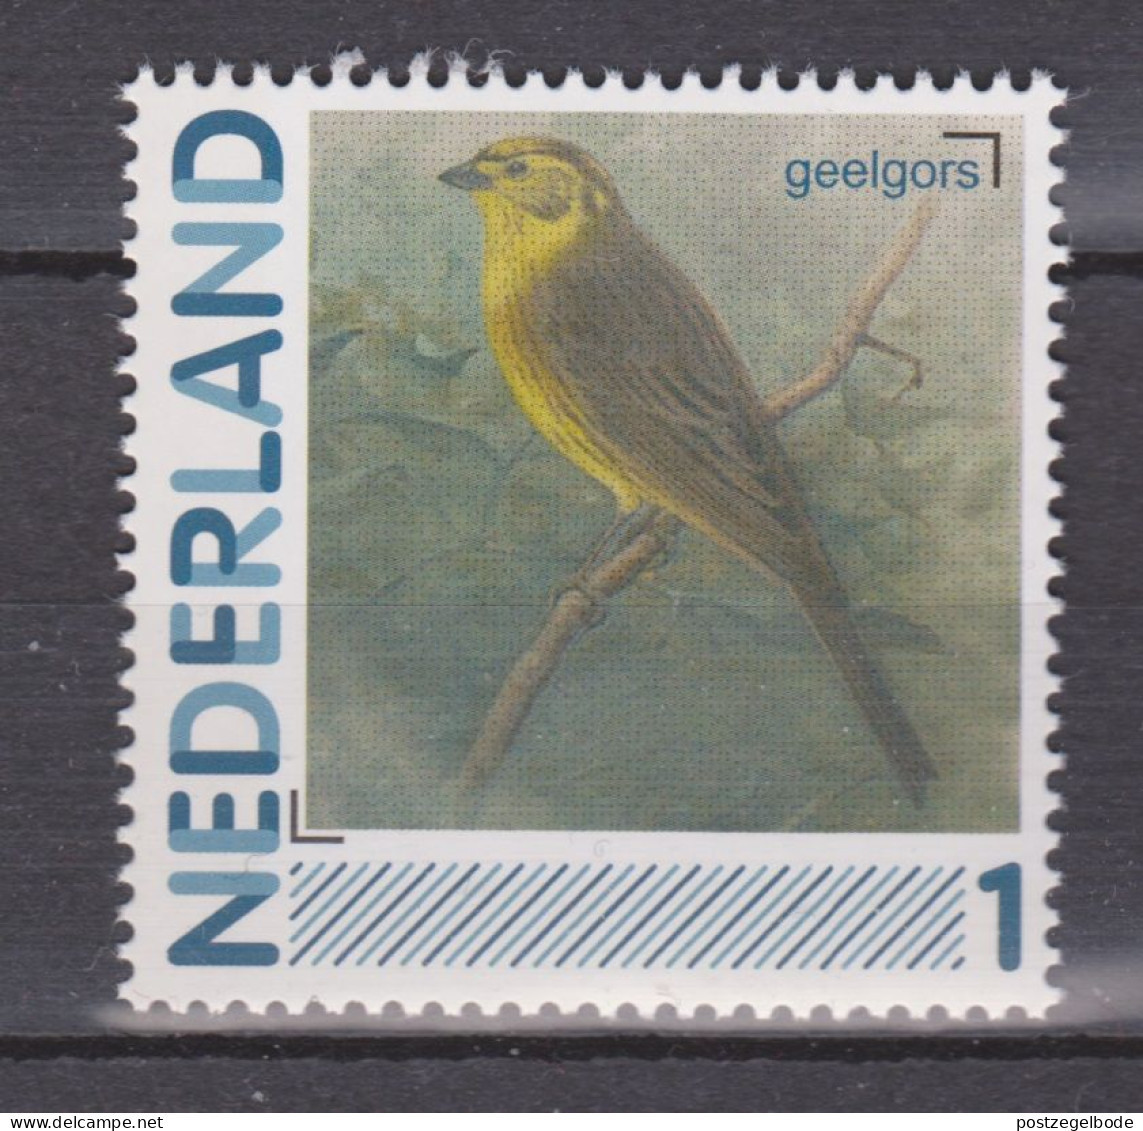 Nederland Netherlands Pays Bas Holanda MNH Geelgors Yellowhammer Bruant Jaune Escribano Cerillo Vogel Bird Ave Oiseau - Passeri